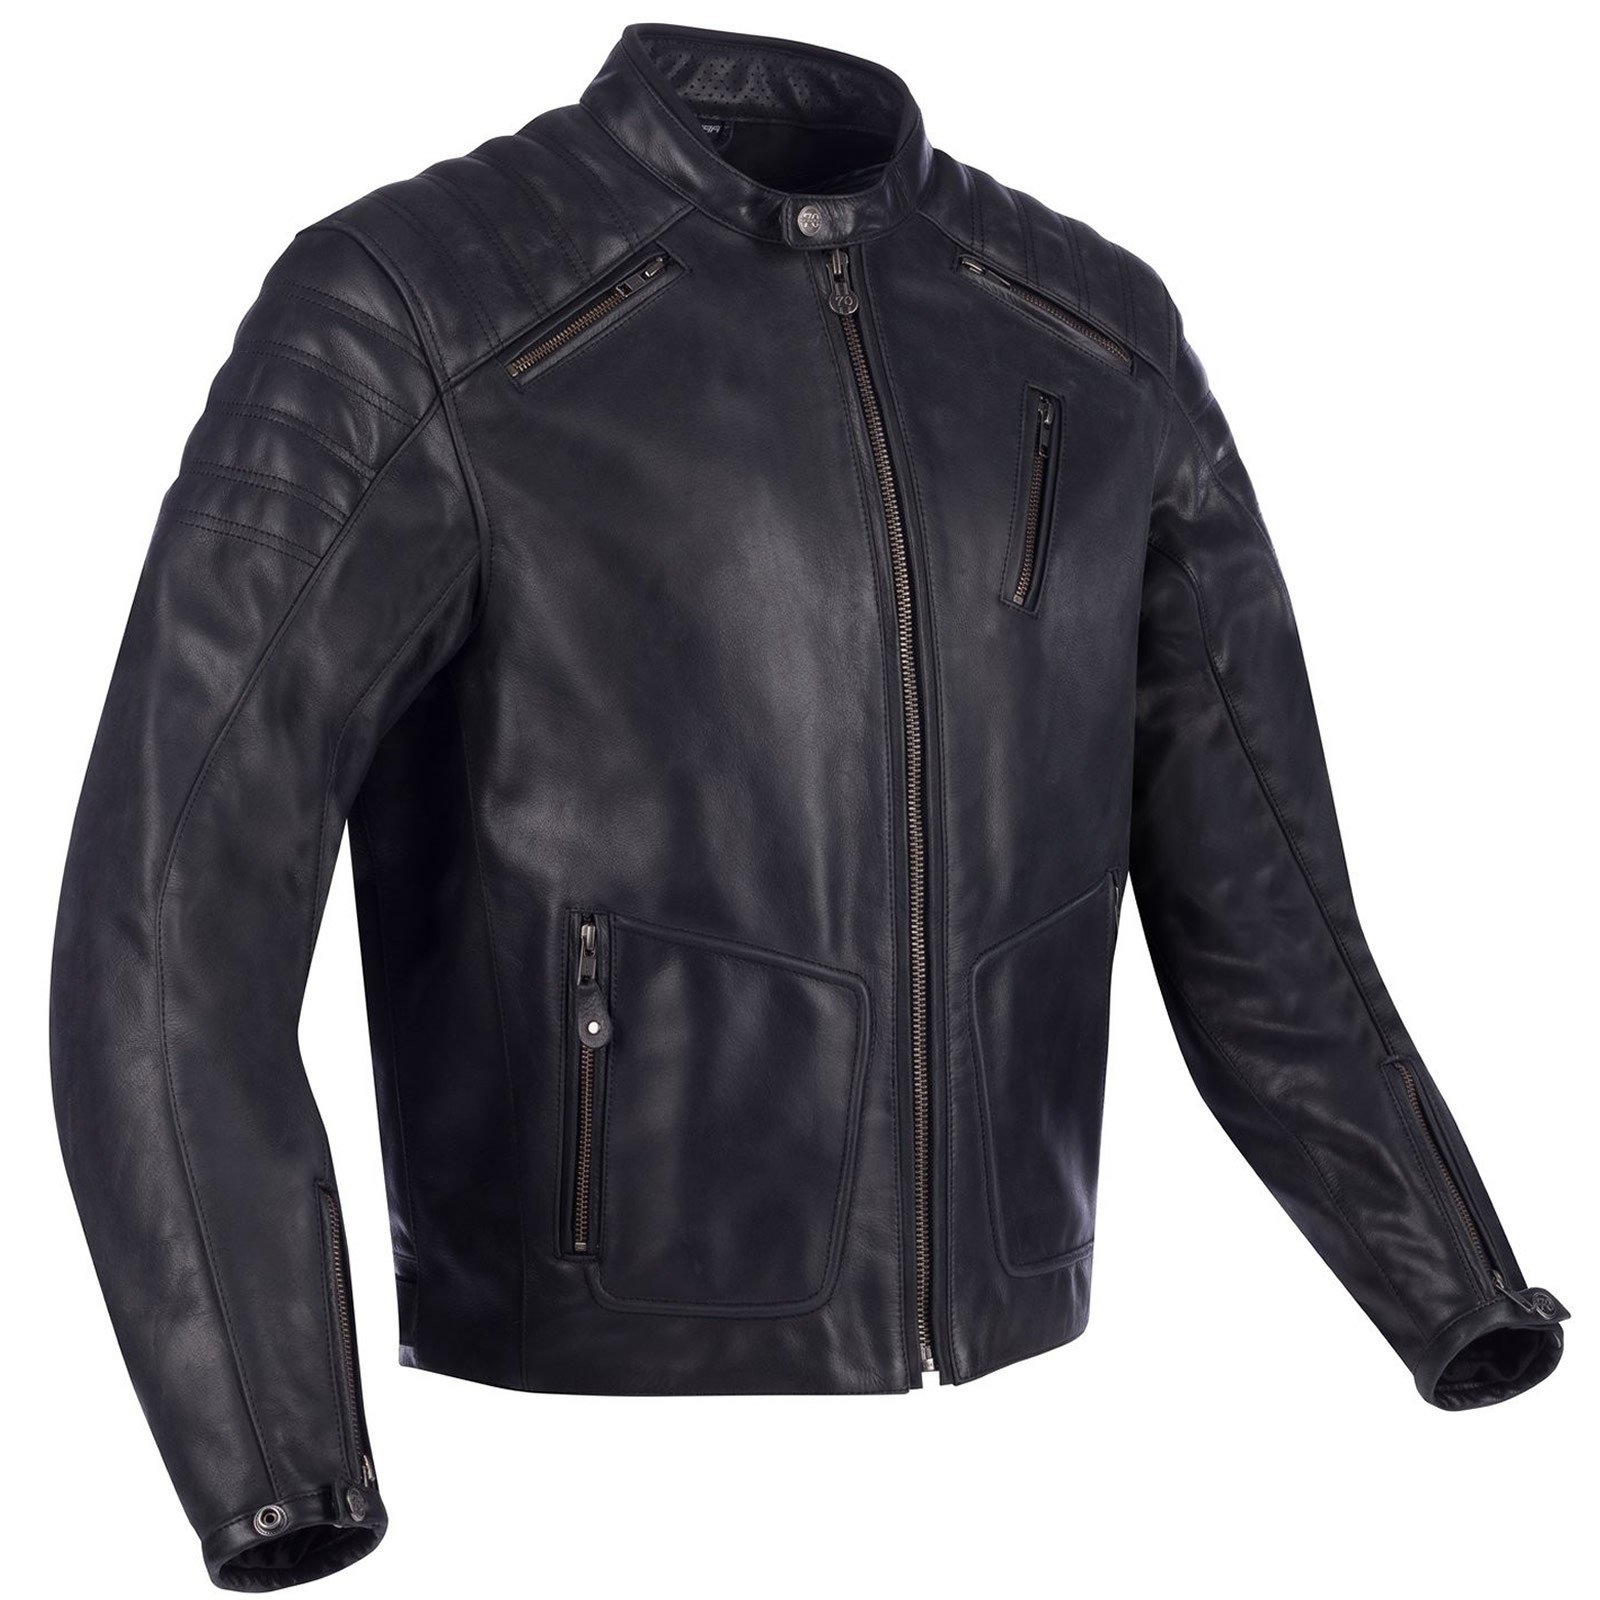 Image of Segura Angus Jacket Black Size L ID 3660815166215